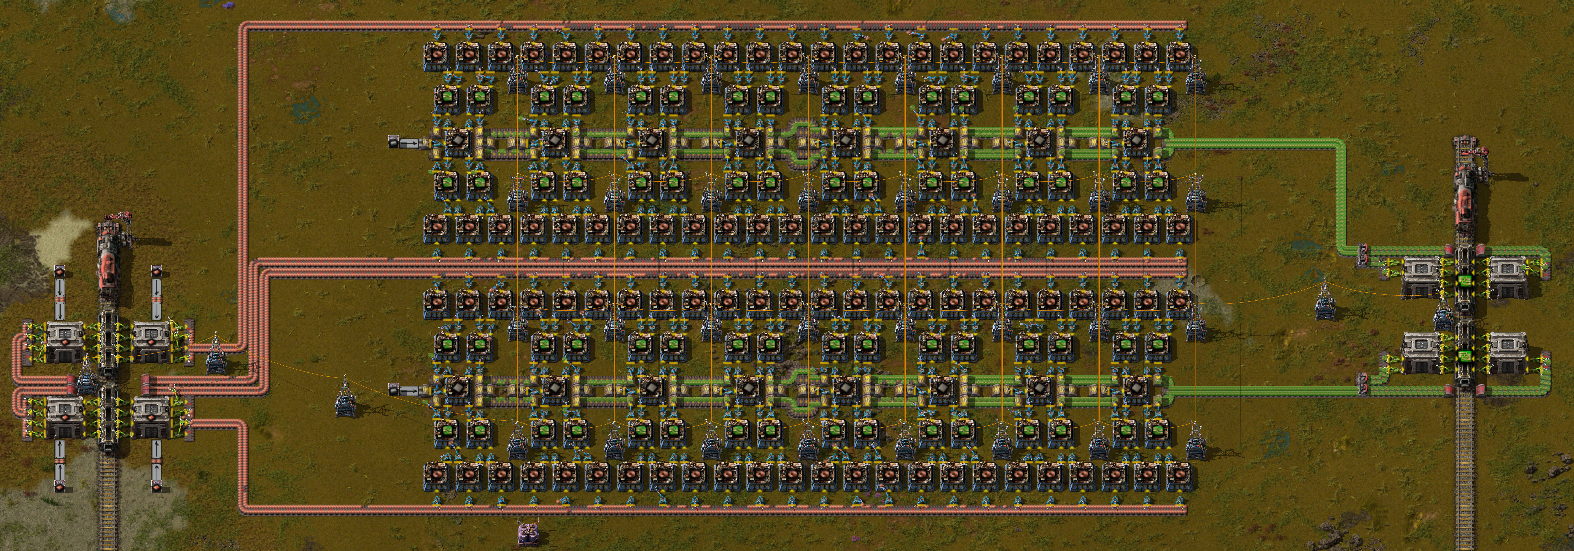 A symmetric circuit factory with symmetric outputs